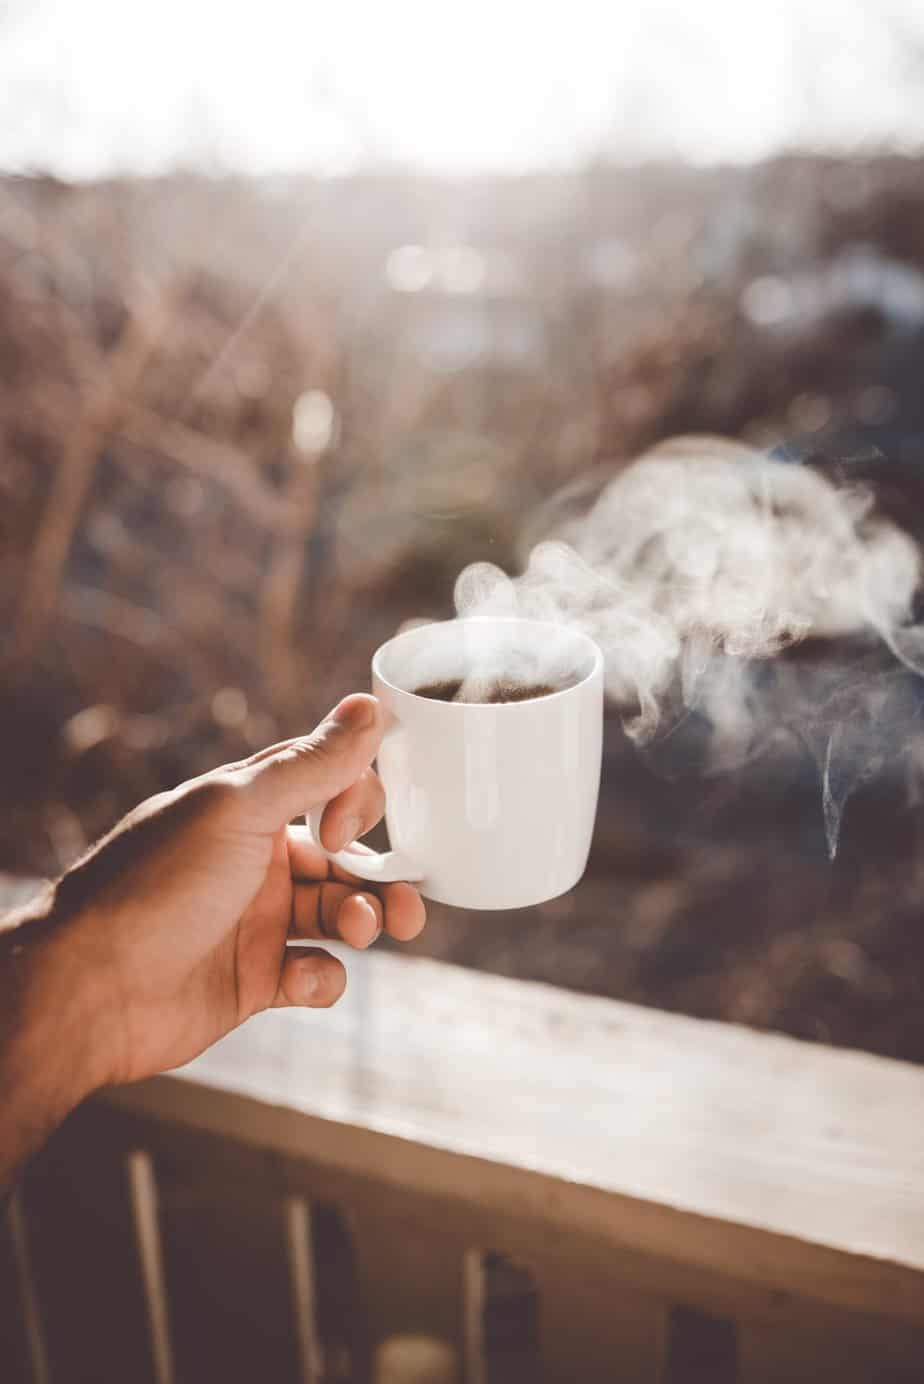 Does Coffee Go Bad? – Death Wish Coffee Company